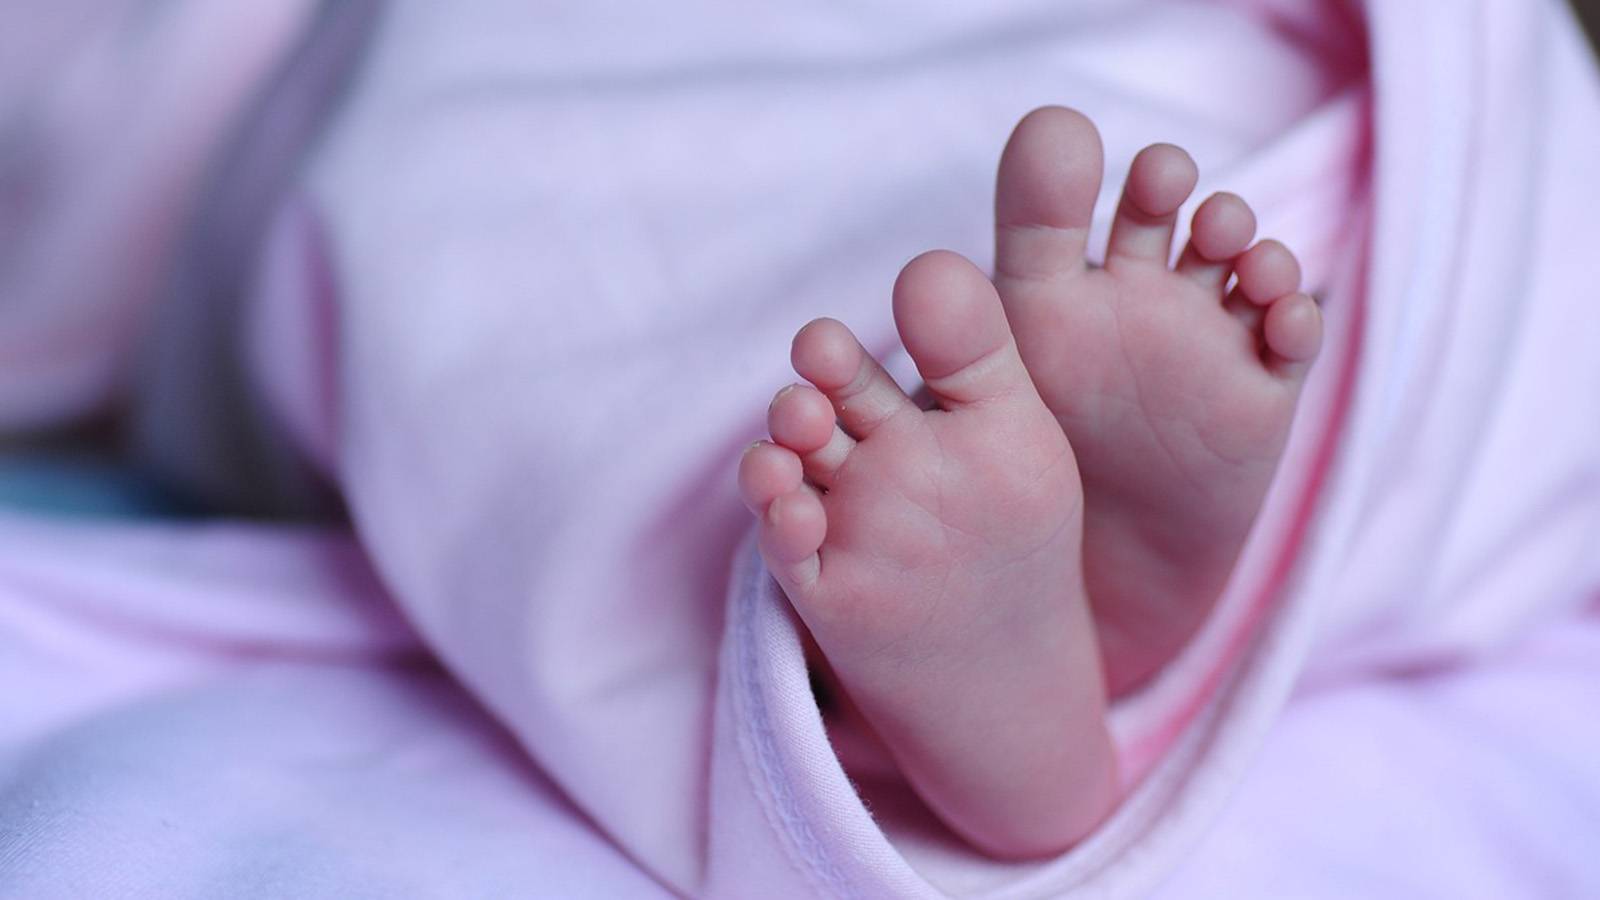 Newborn baby feet wrapped in blankets